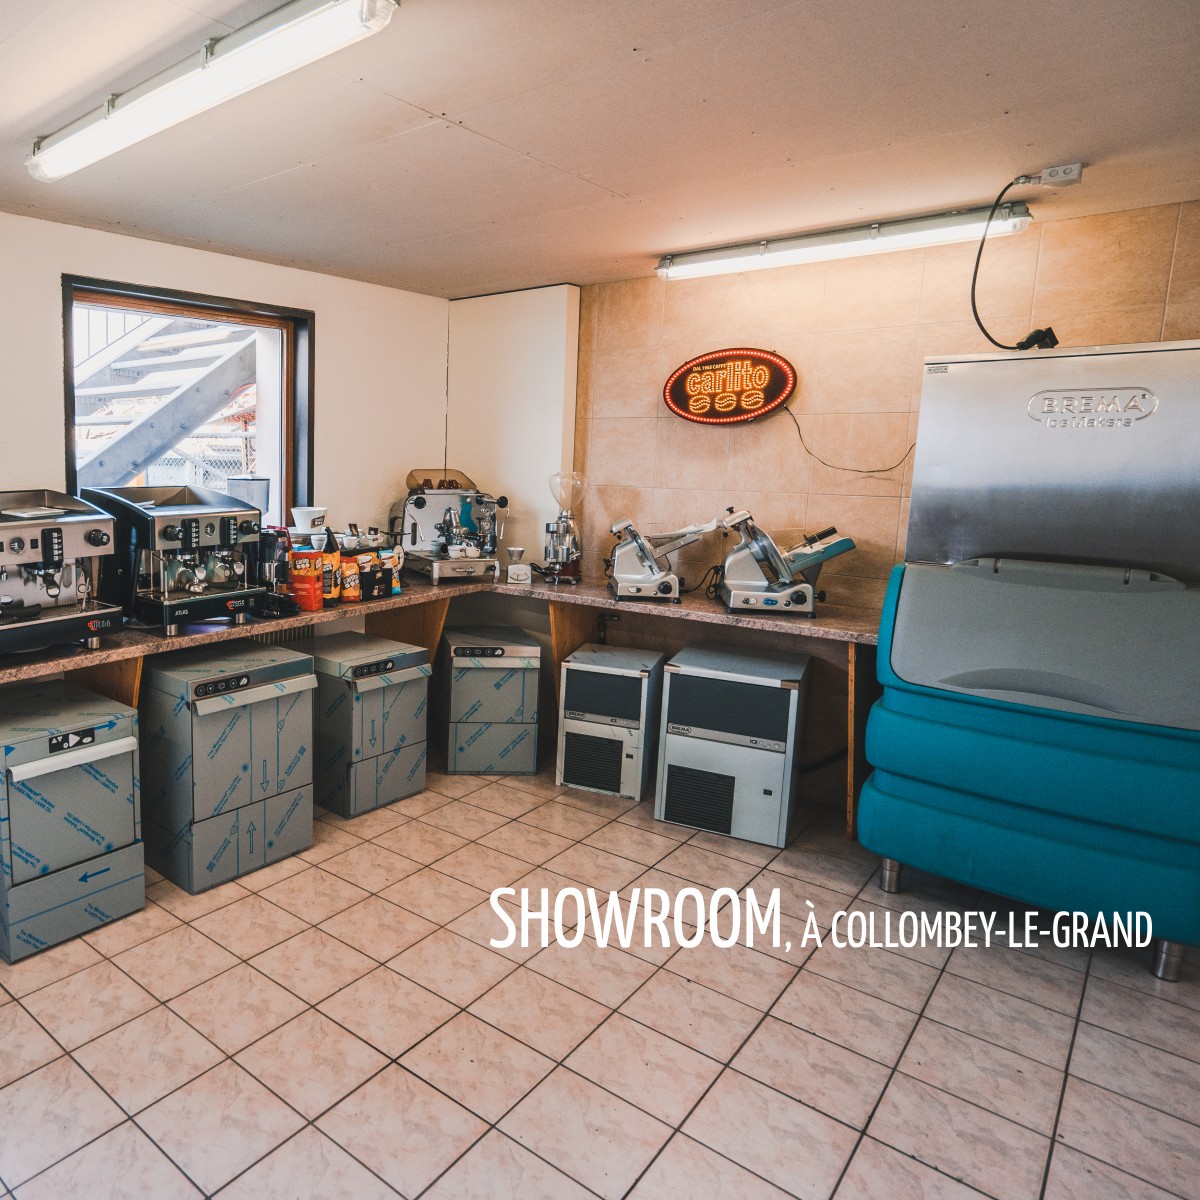 Showroom à Collombey-Le-Grand Bifrare